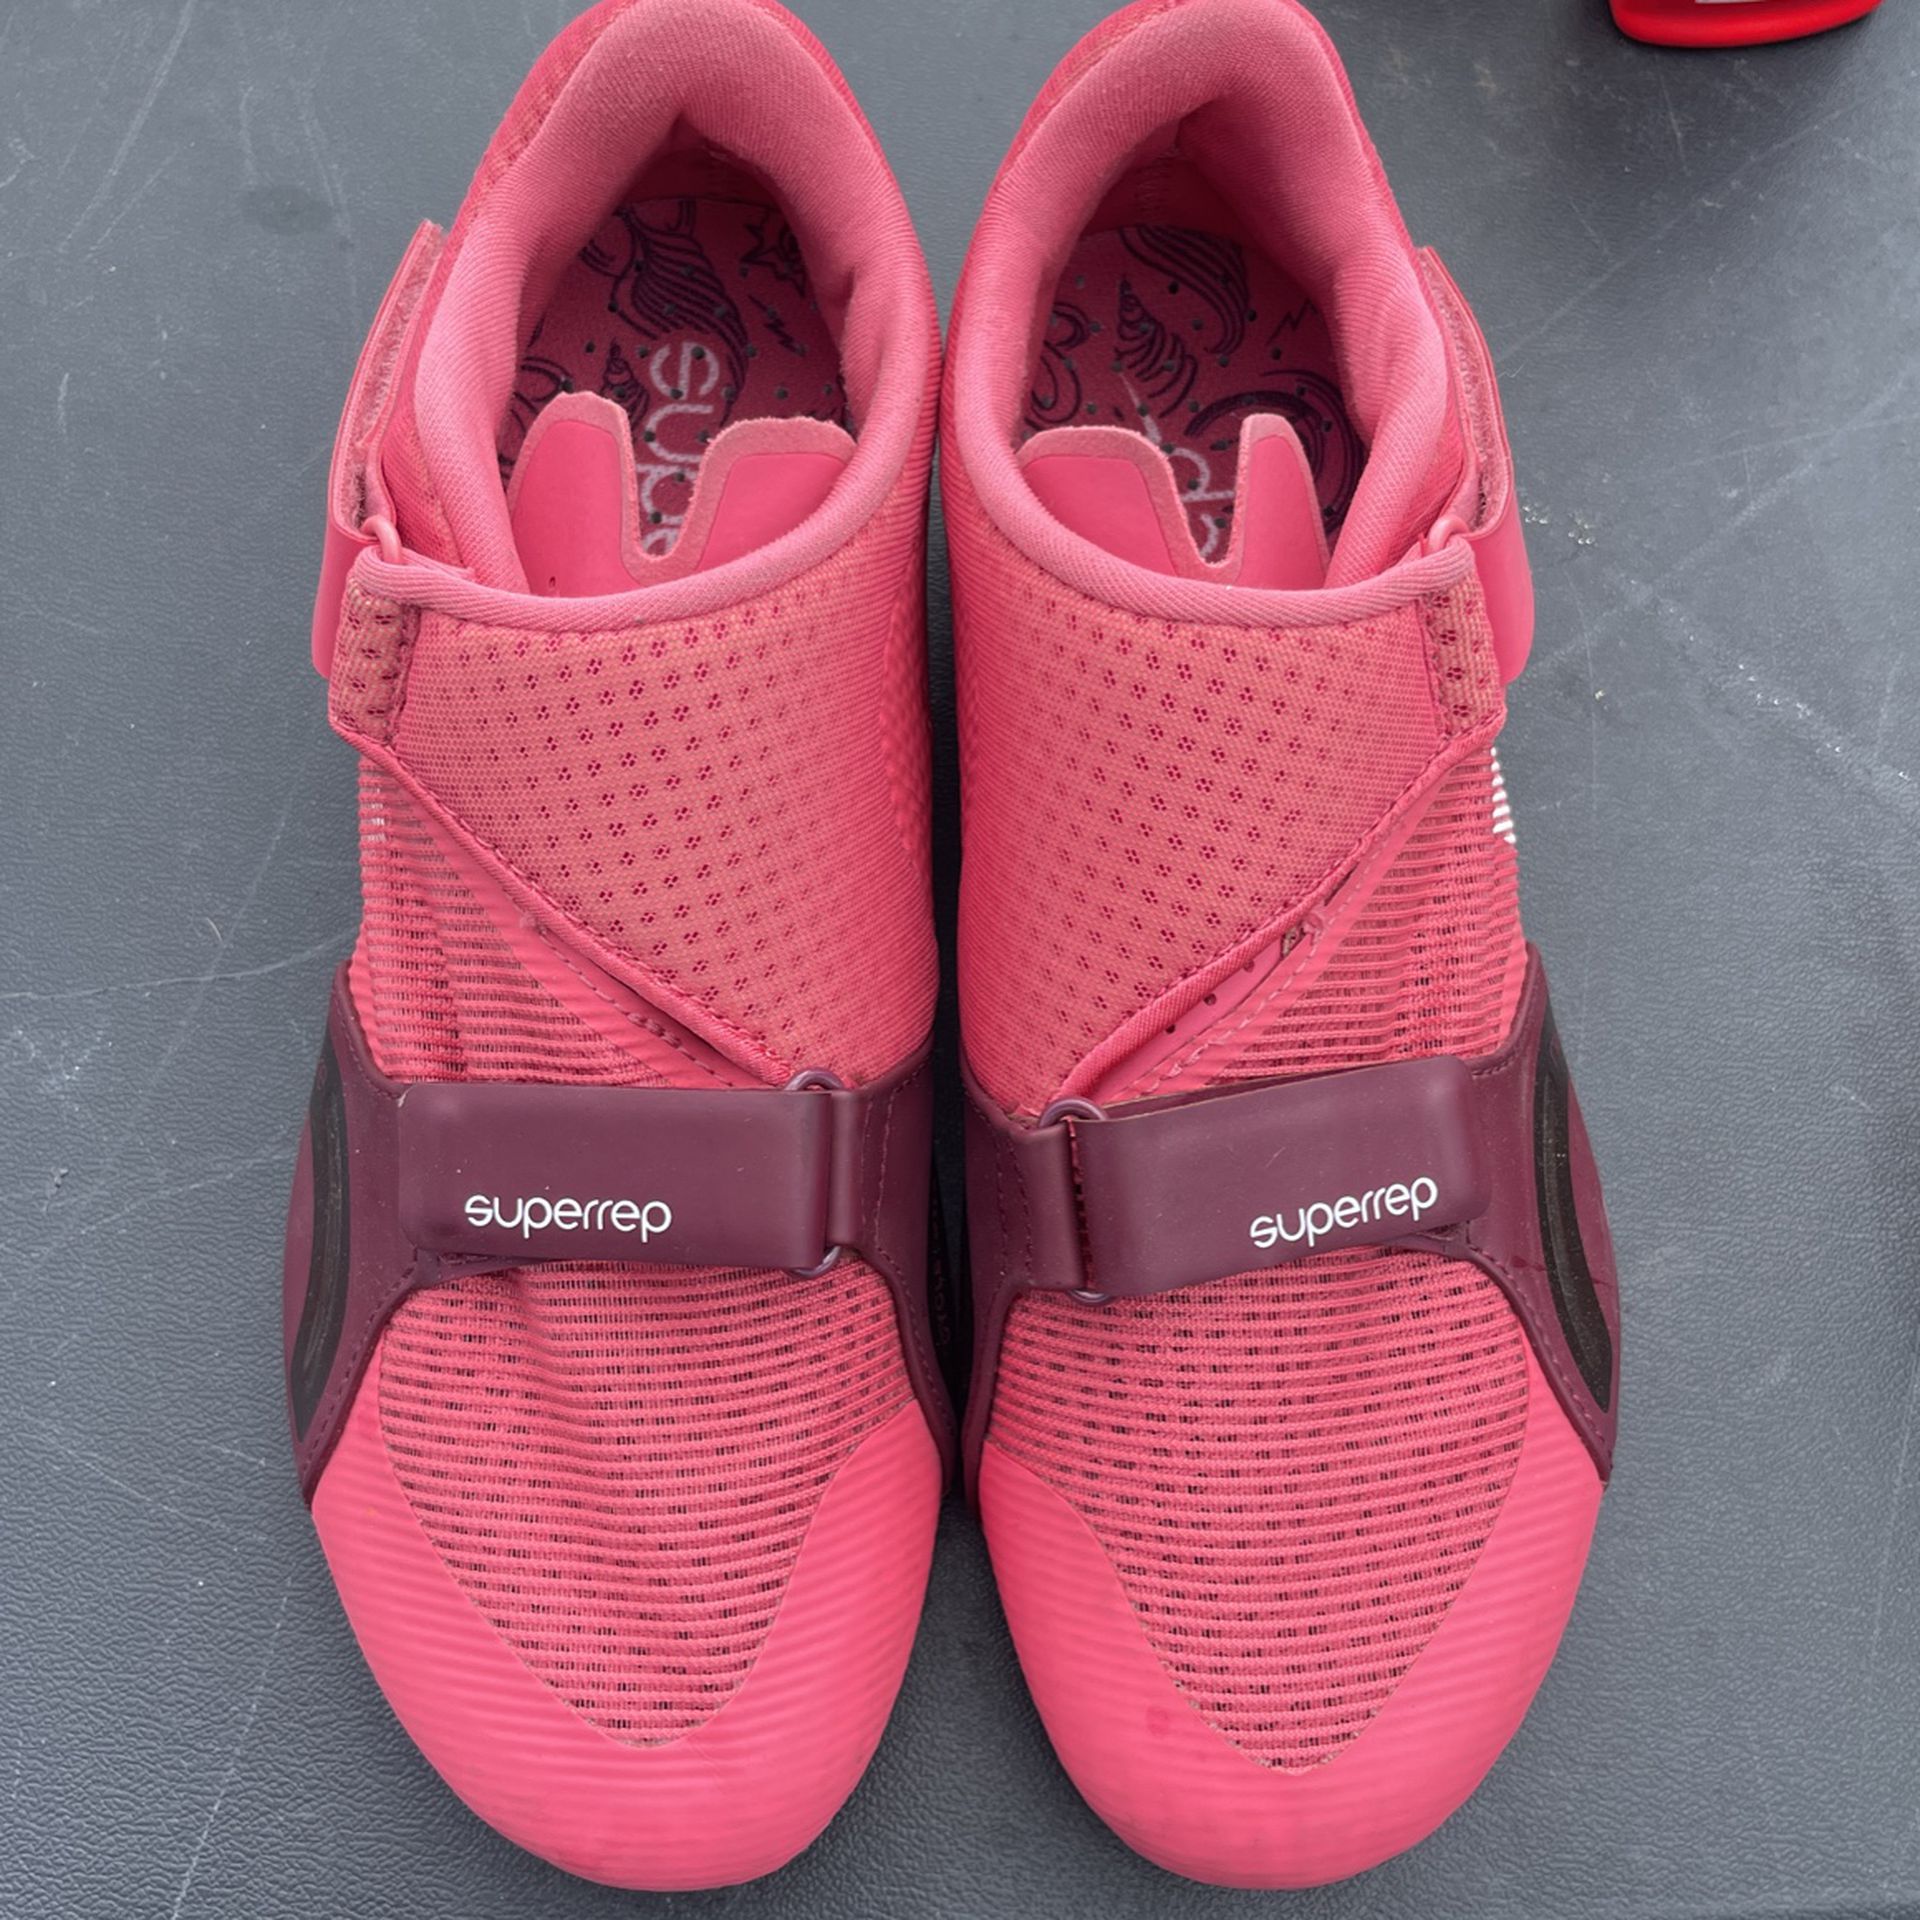 Nike Superrep shoes